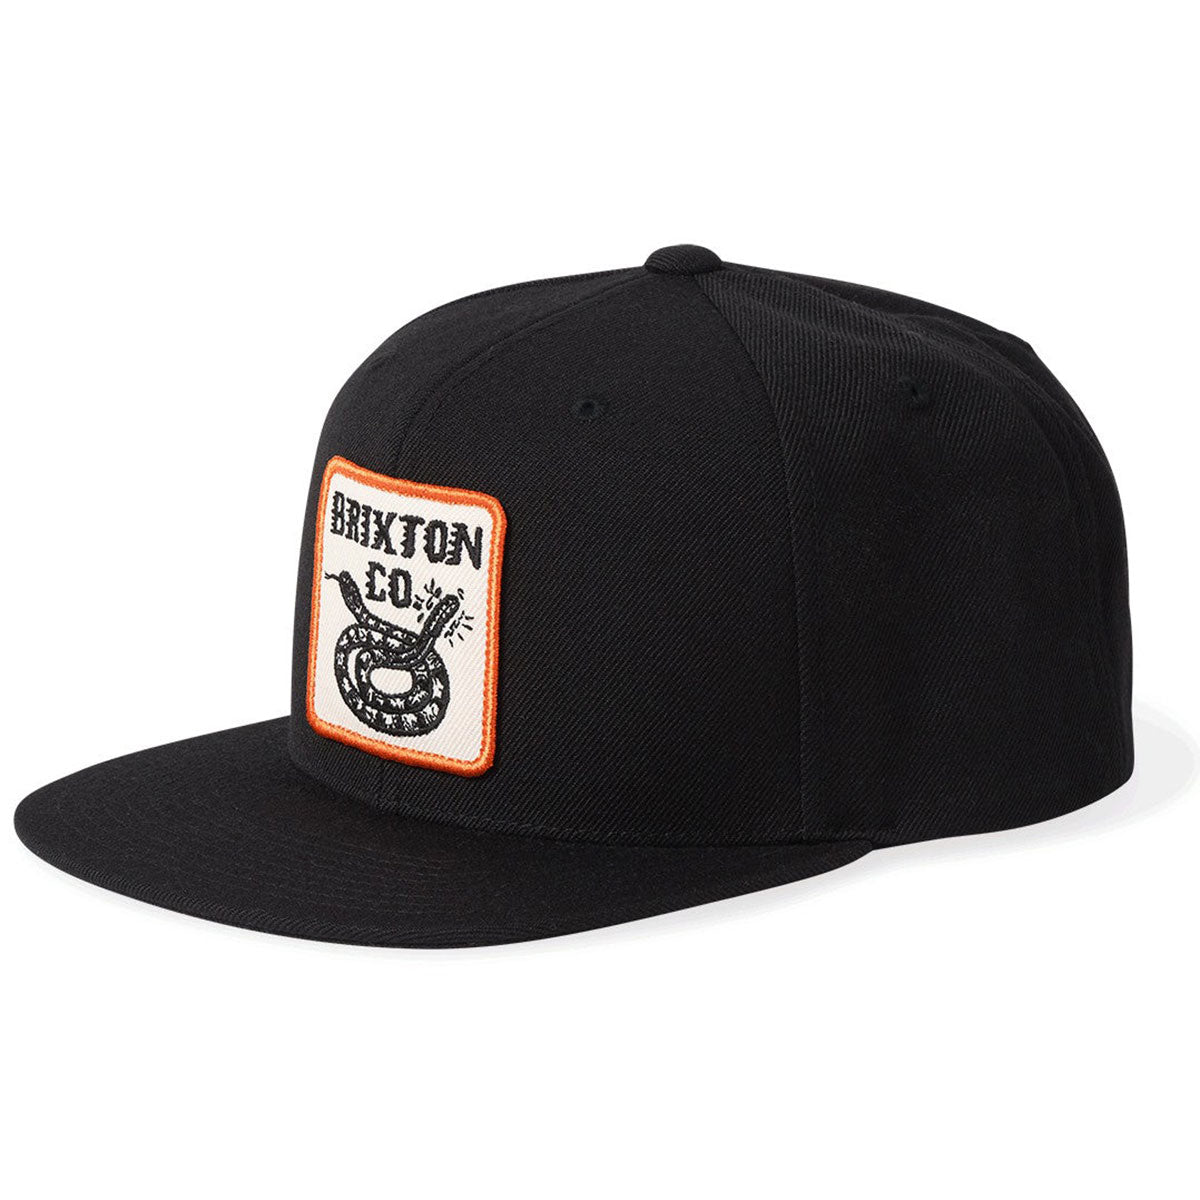 Brixton Homer Mp Snapback Hat - Black image 1